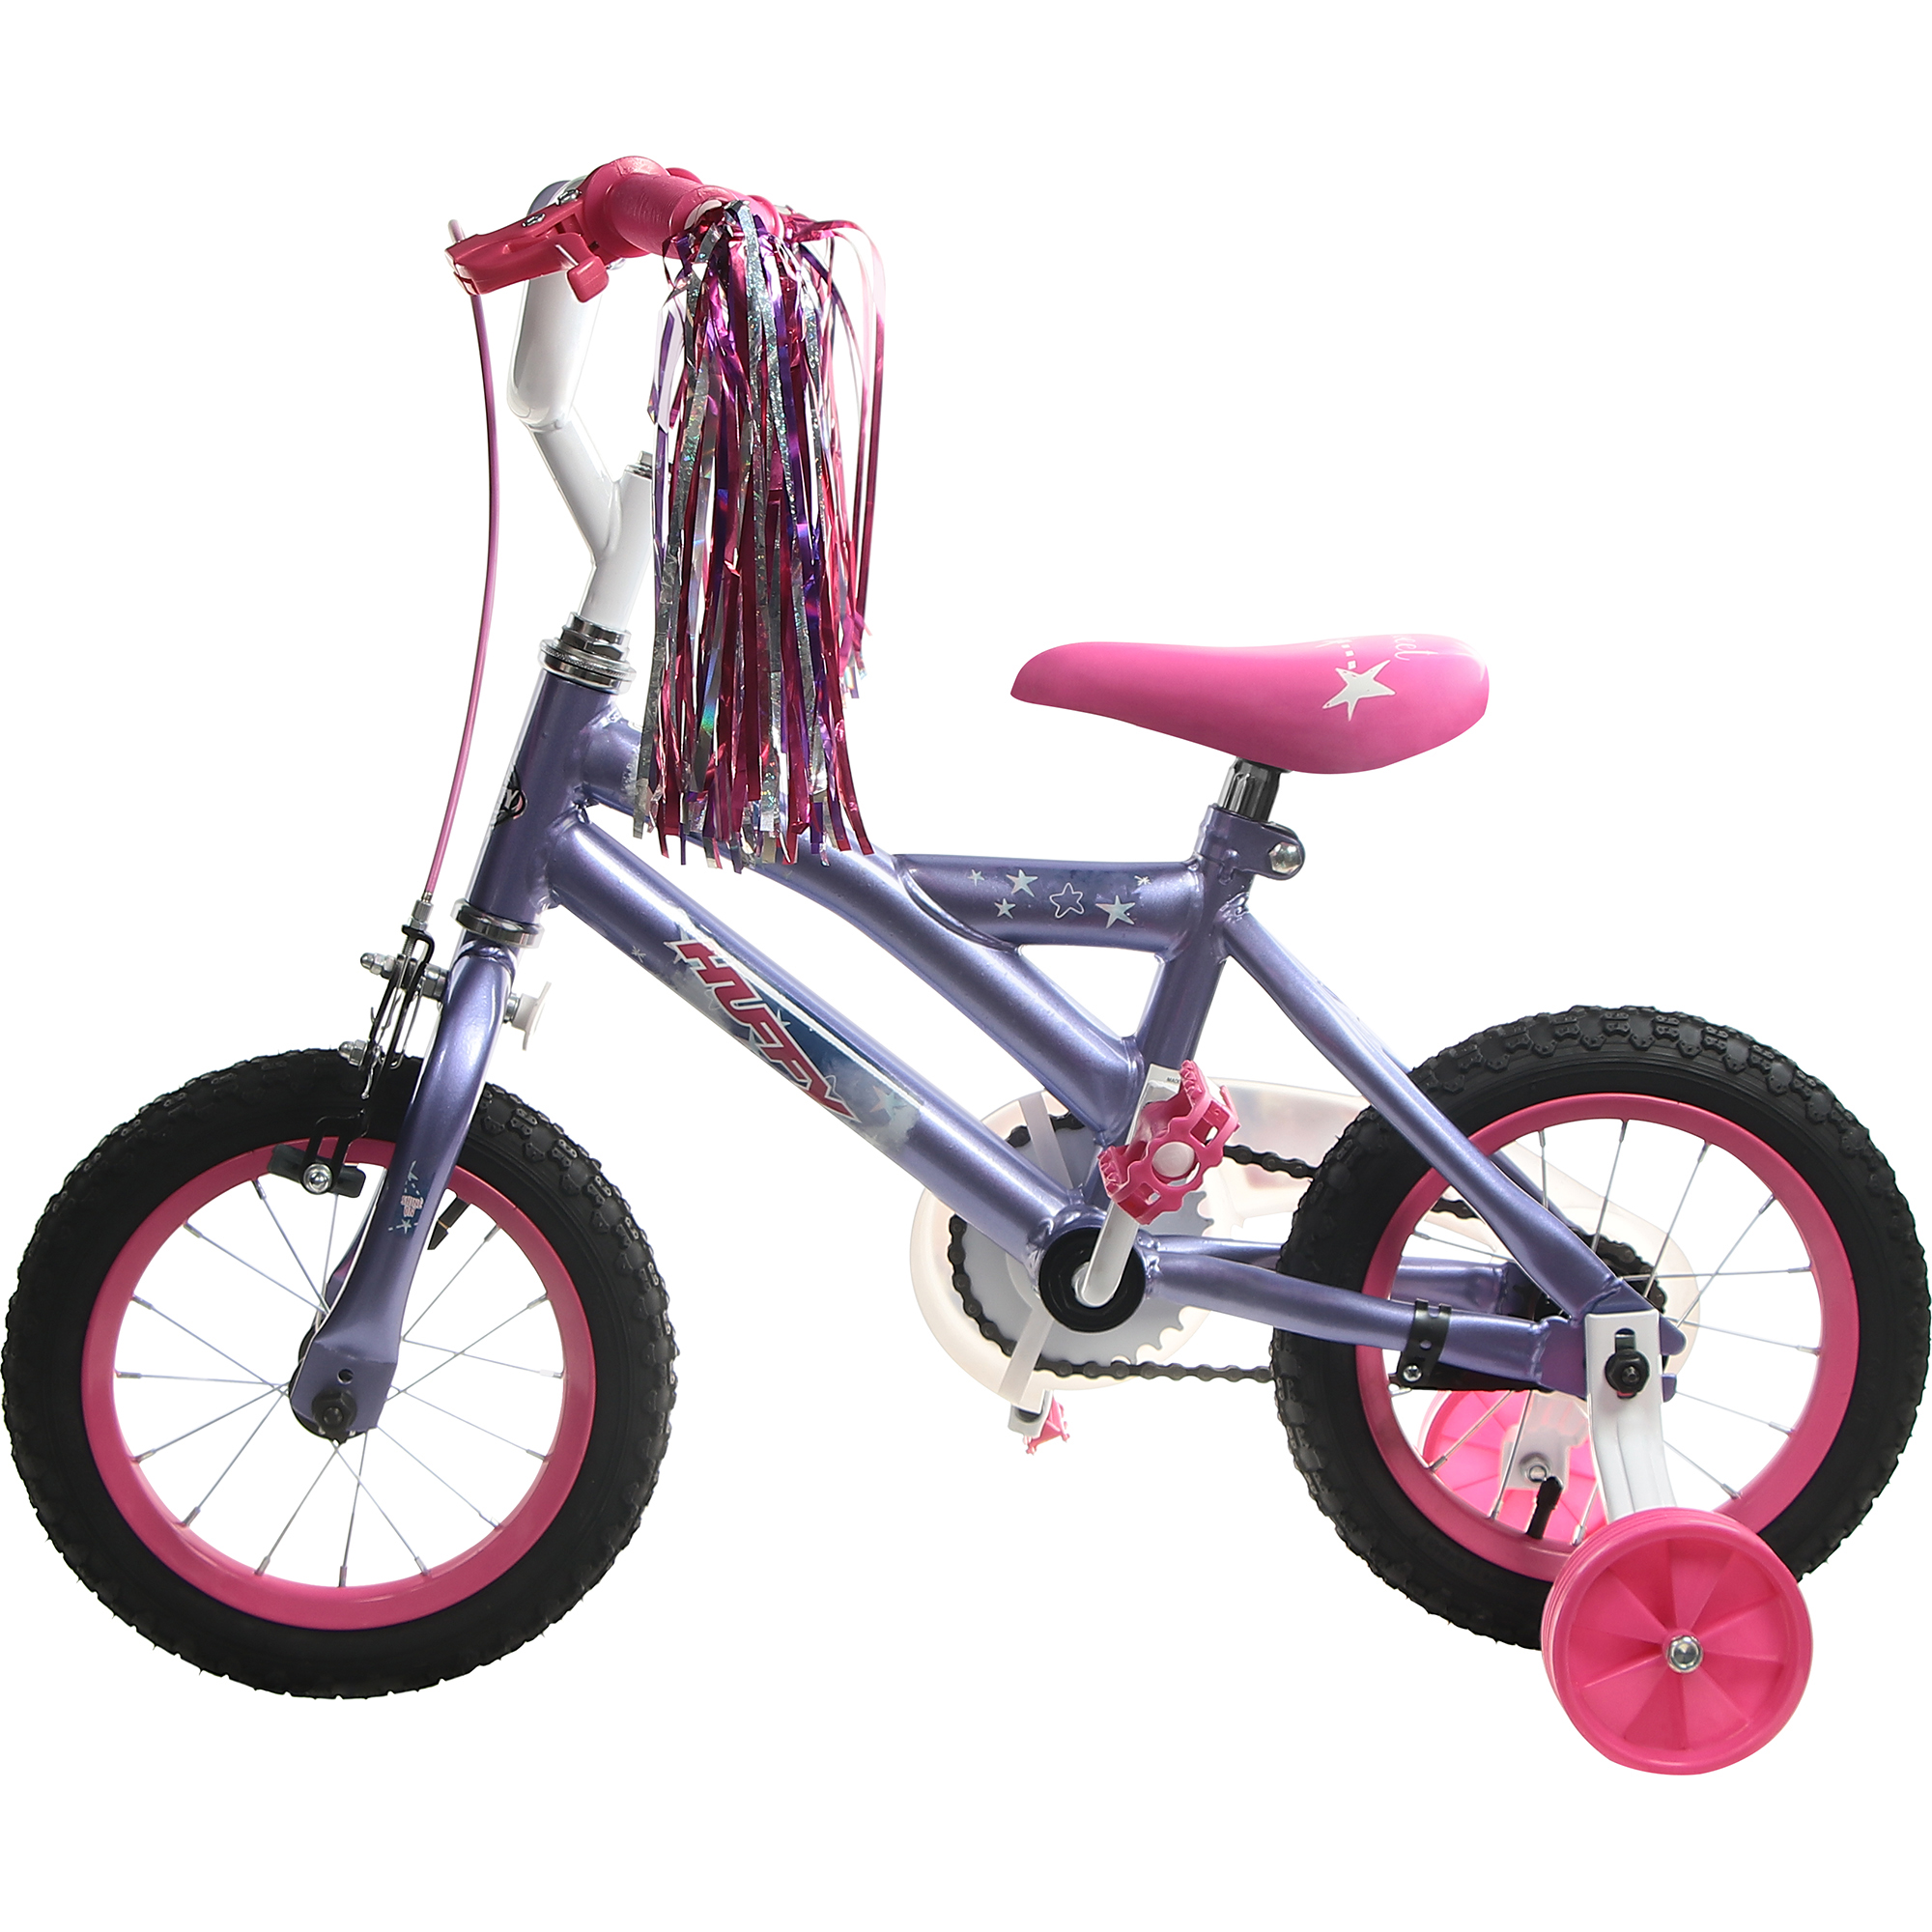 Велосипед детский Huffy So sweet, 12, для девочек велосипед детский huffy so sweet 12 для девочек